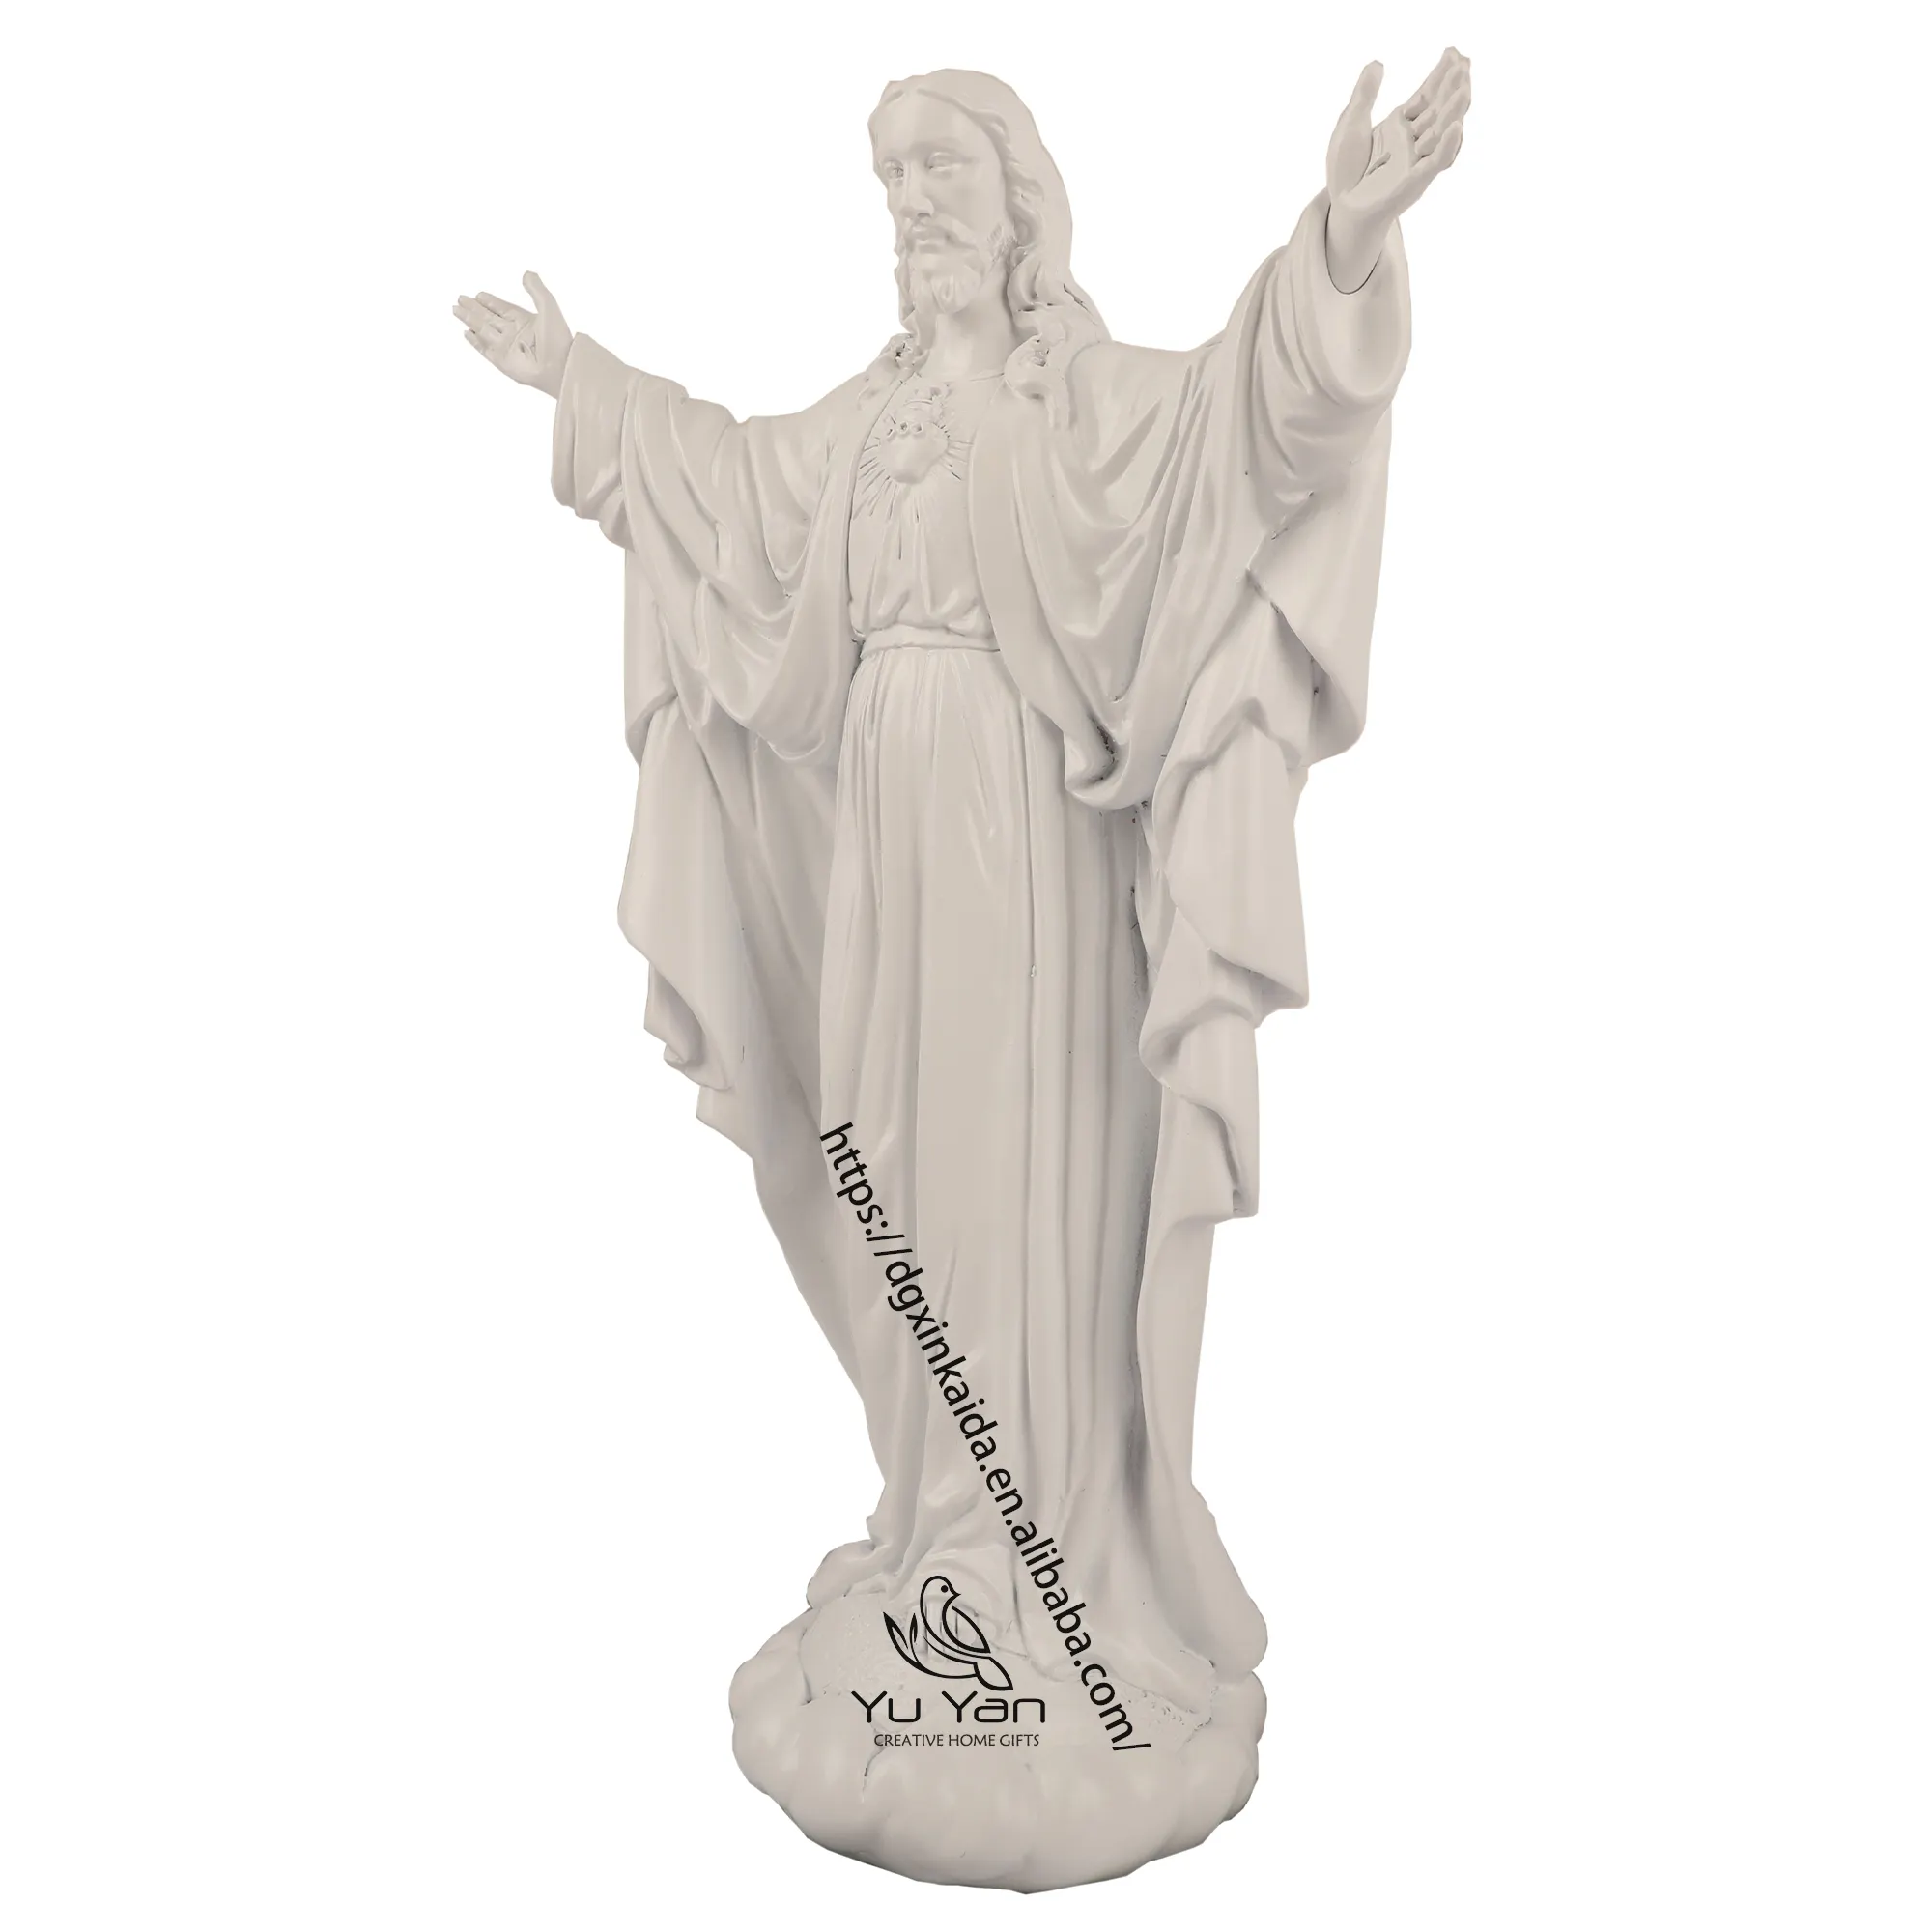 Estatuas religiosas católicas al por mayor de fábrica, golosinas cristianas de resina, estatua comercial personalizada del niño Jesús